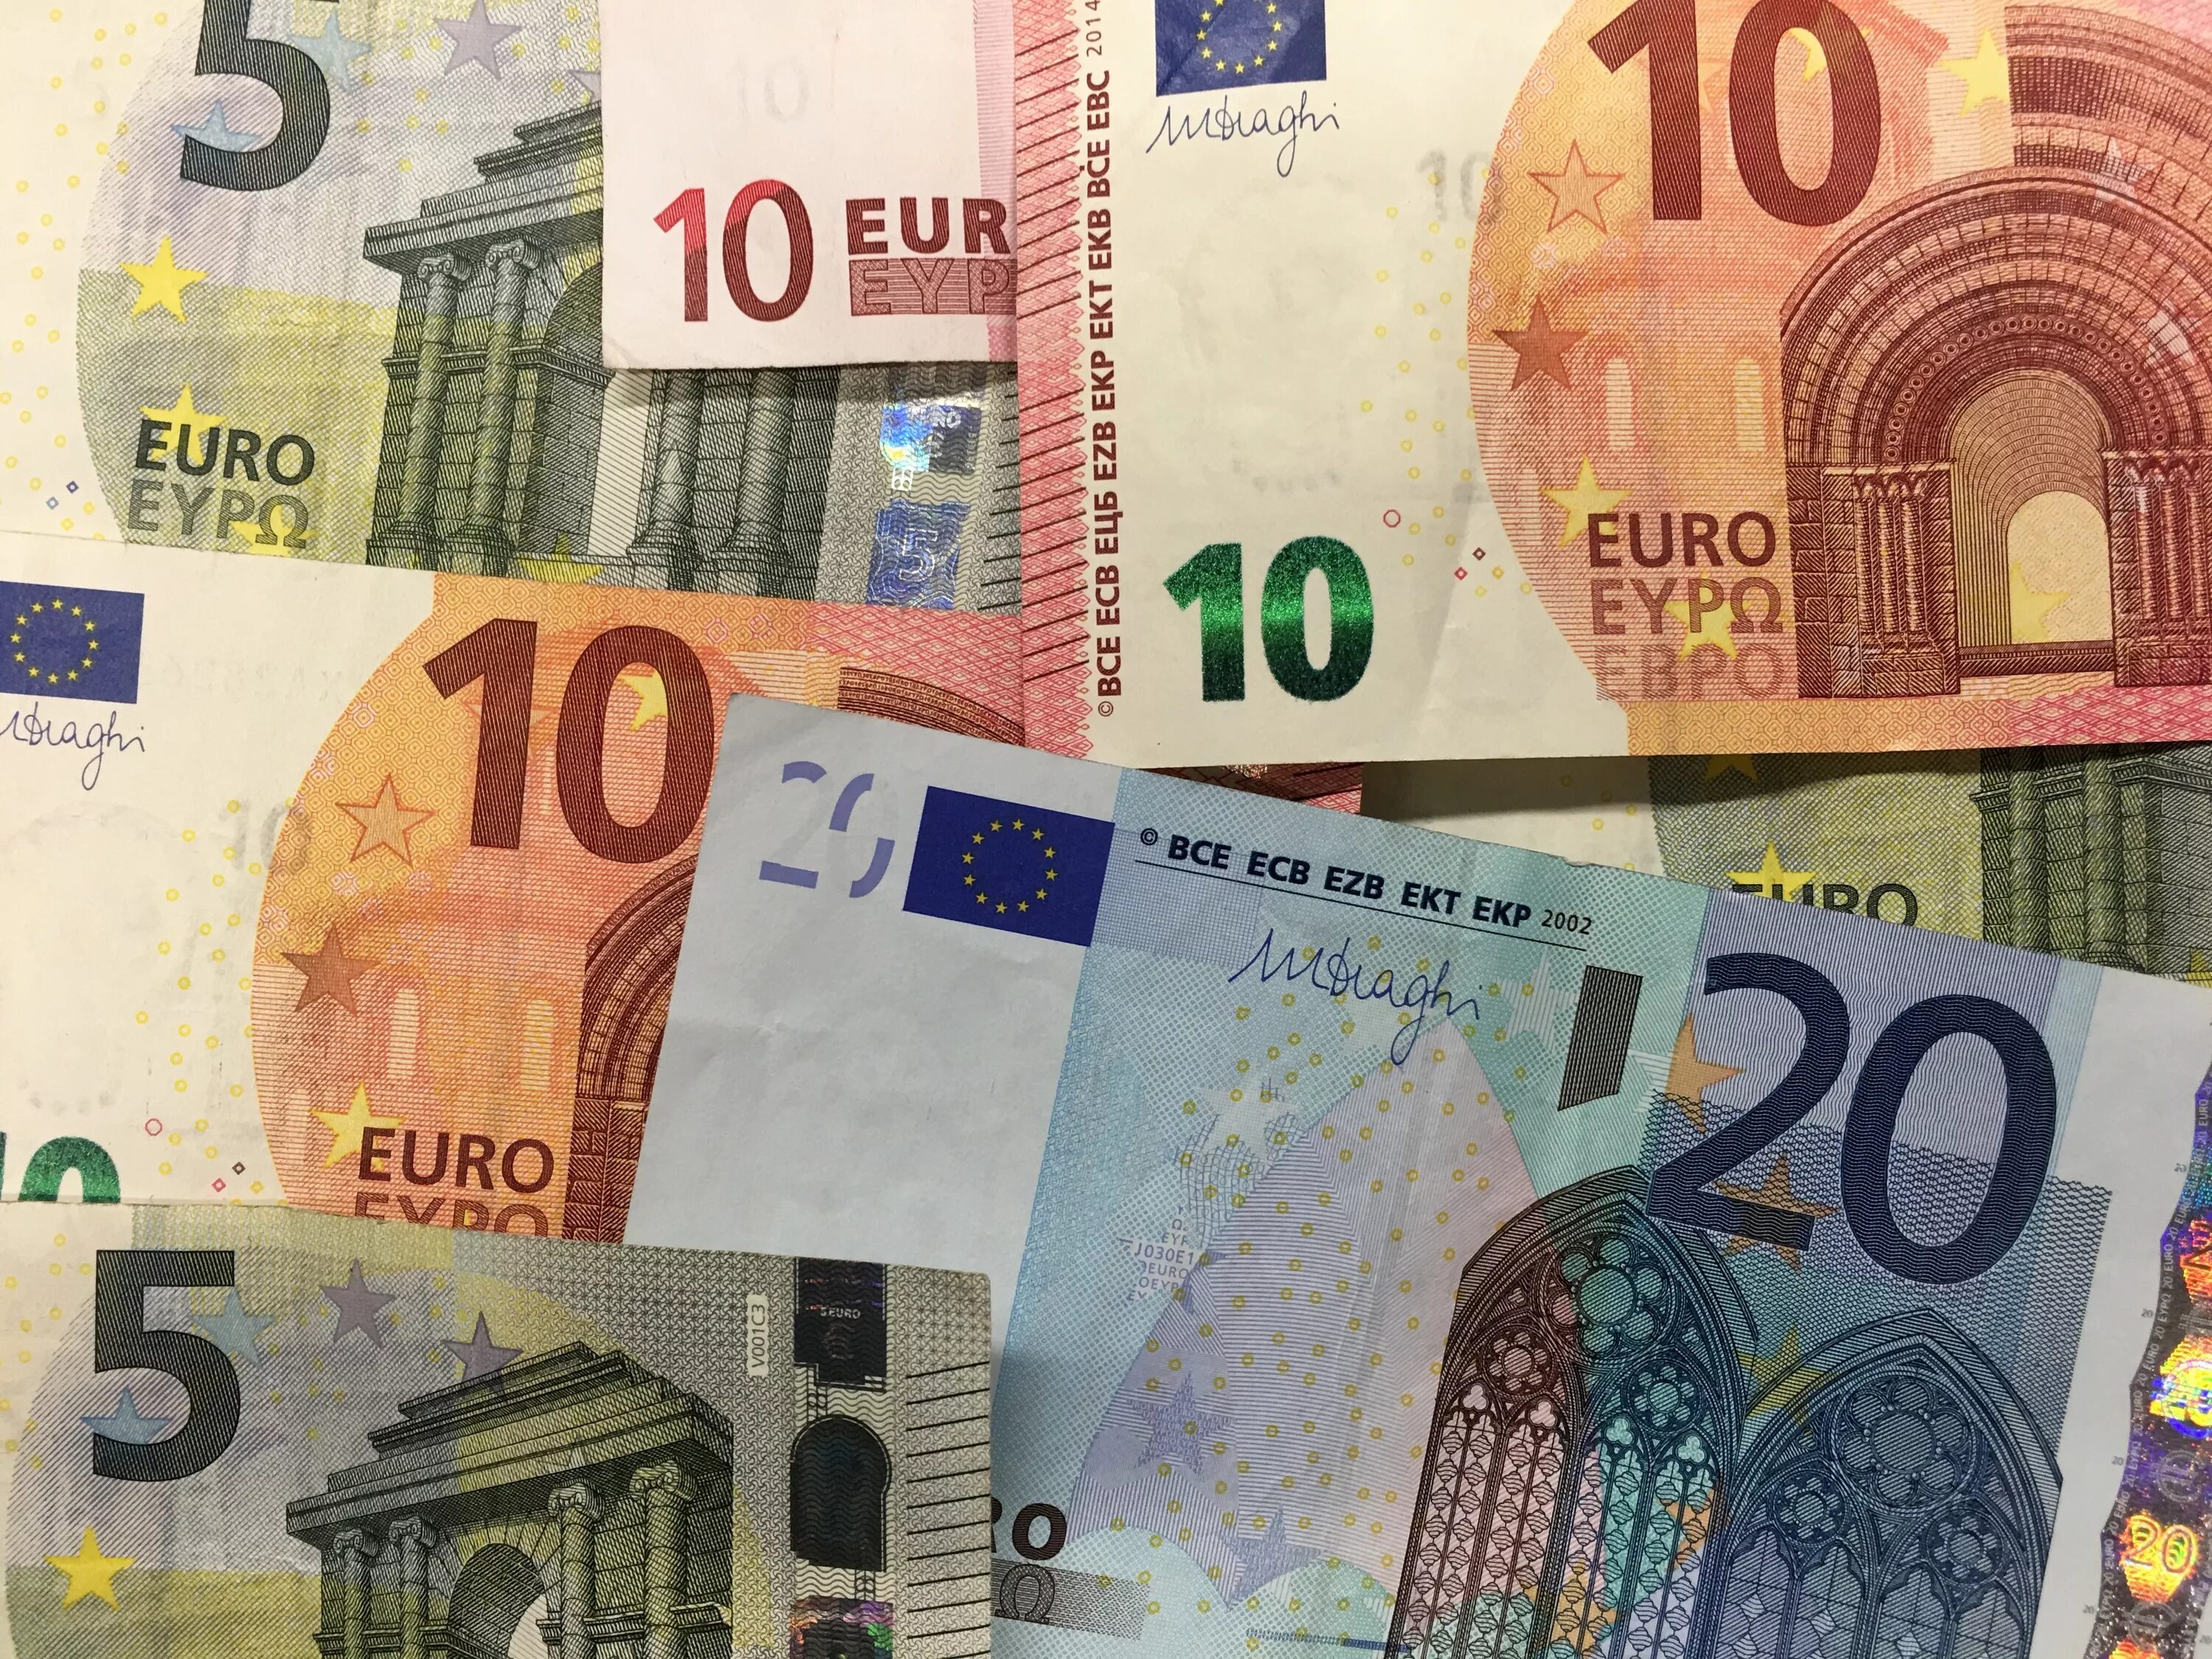 10 Евро купюра. Евро валюта купюра. Изображение банкнот евро. Евро фото. Самые крупные евро